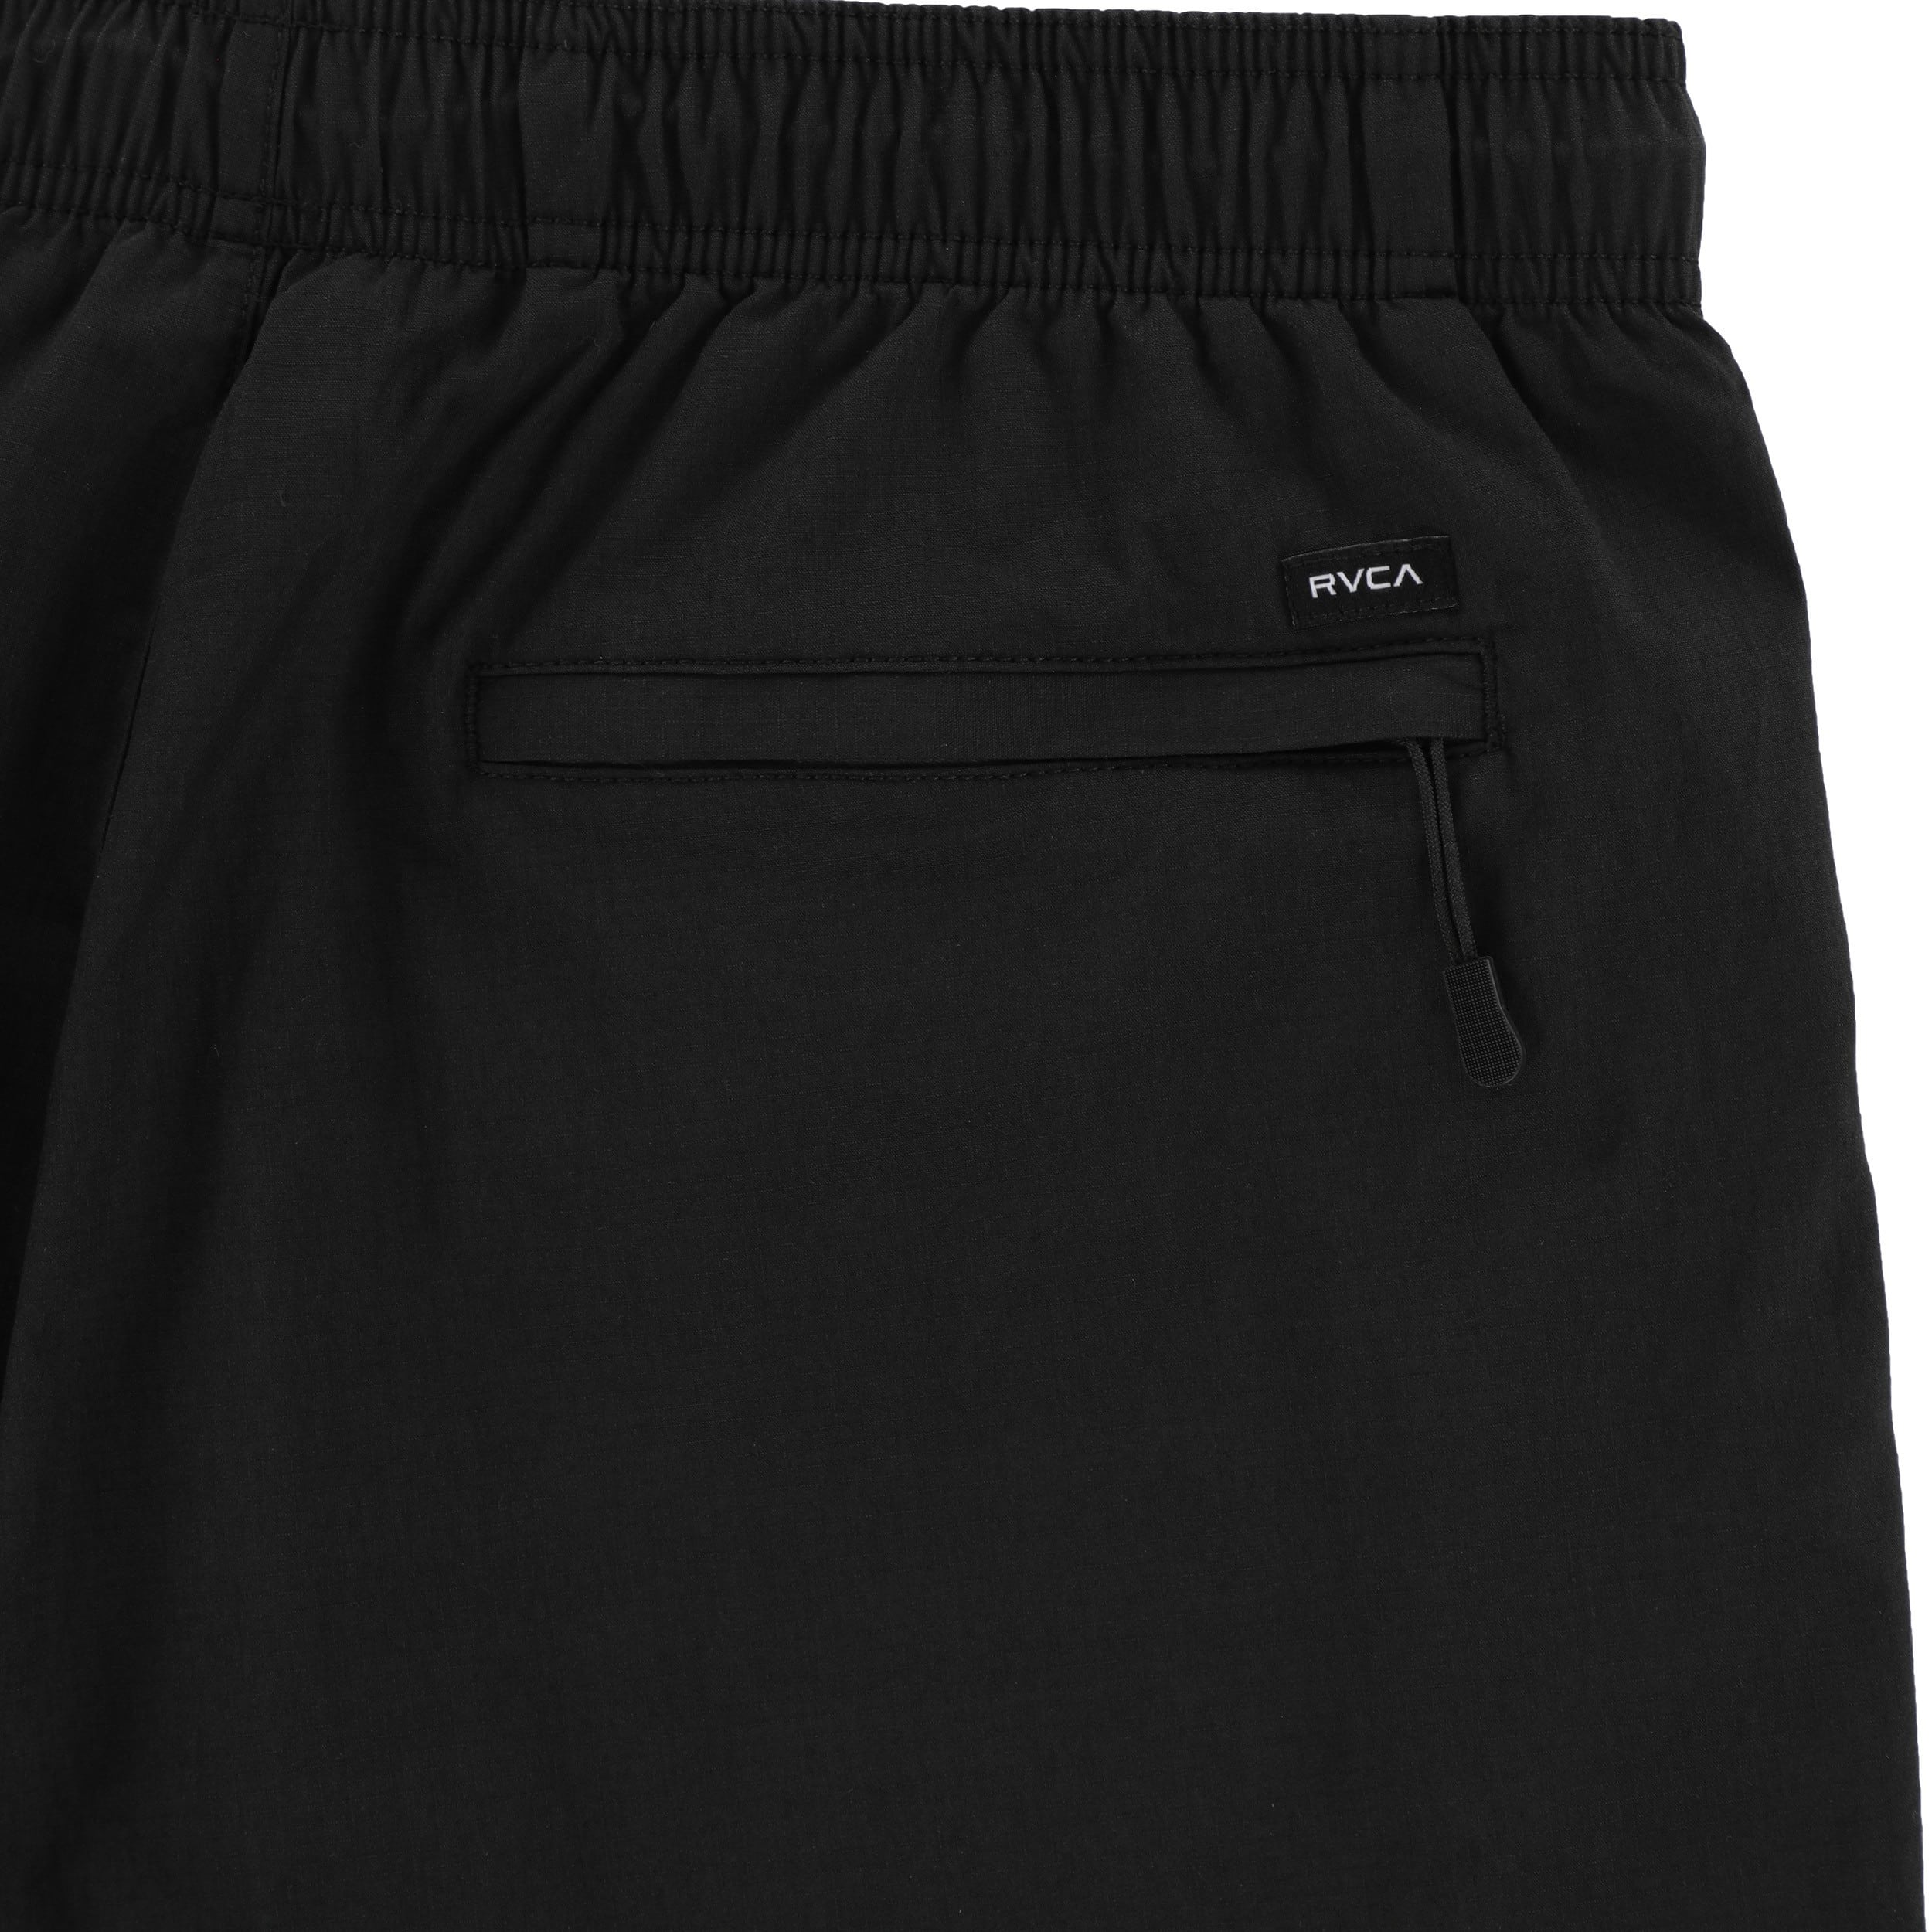 RVCA Brodie 2 Hybrid Shorts - black | Tactics